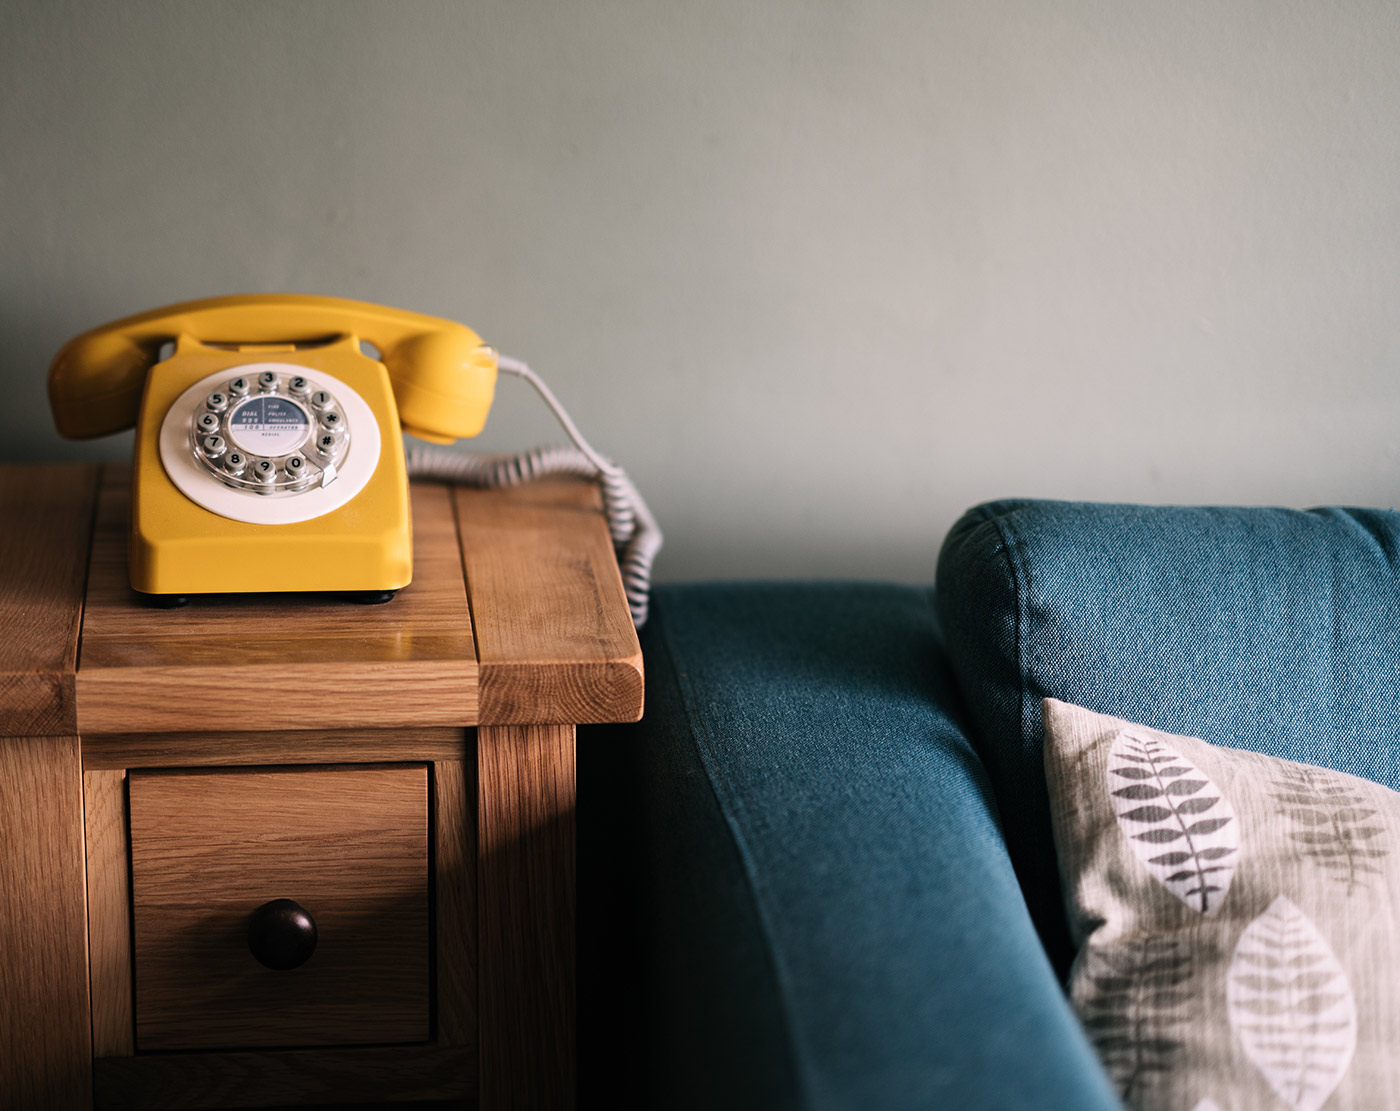 A photo of a yellow rotary telephone near a blue sofa.